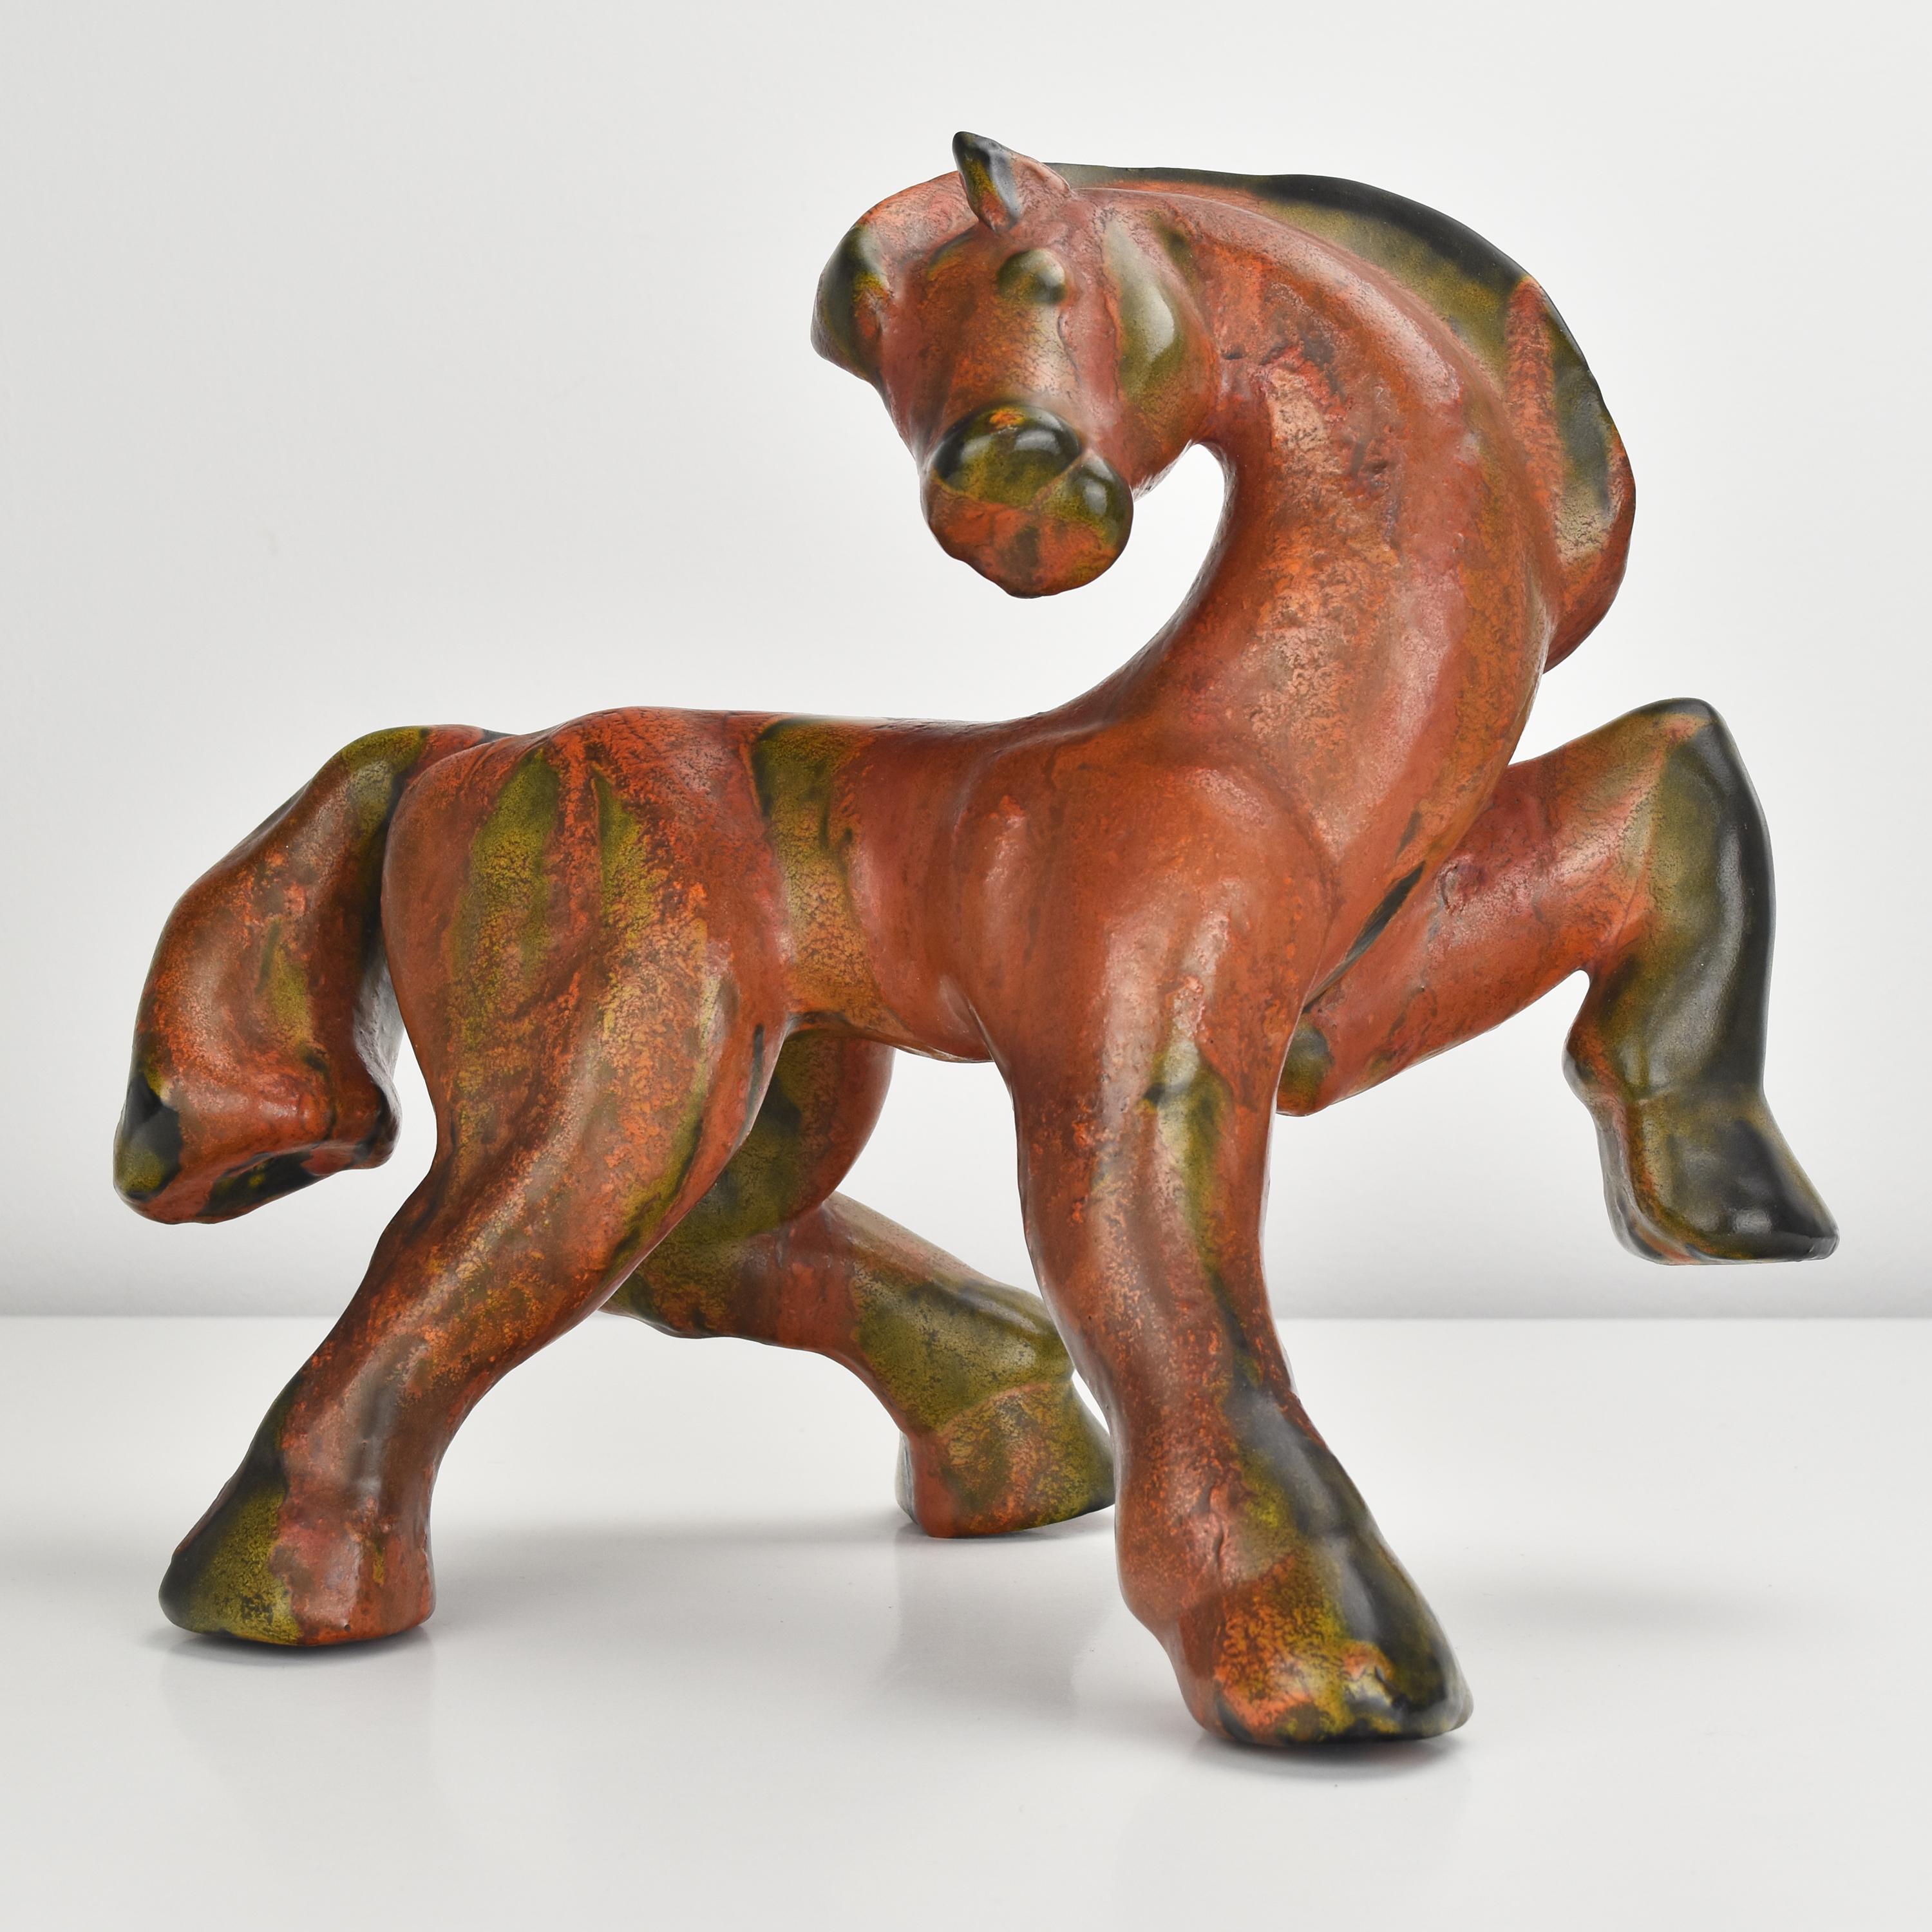 Glazed German Art Deco Pottery Ceramic Horse Sculpture Figurine After Franz Marc For Sale